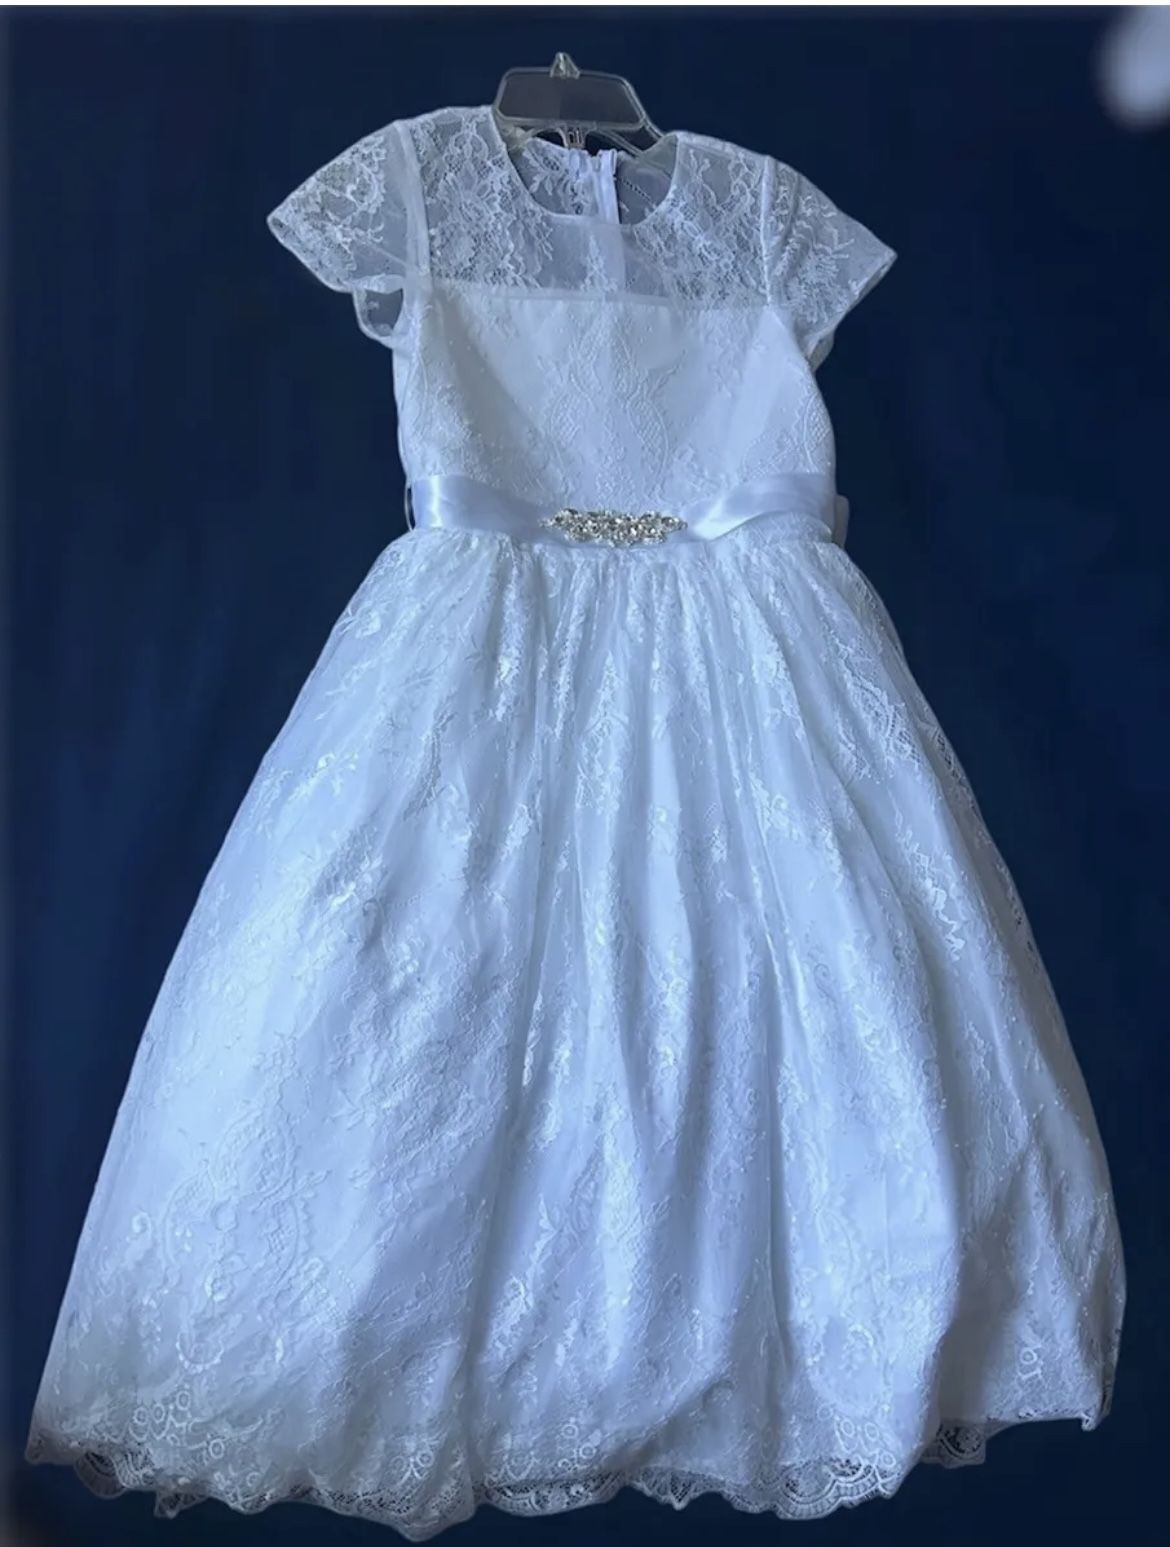 First Comunión White Dress